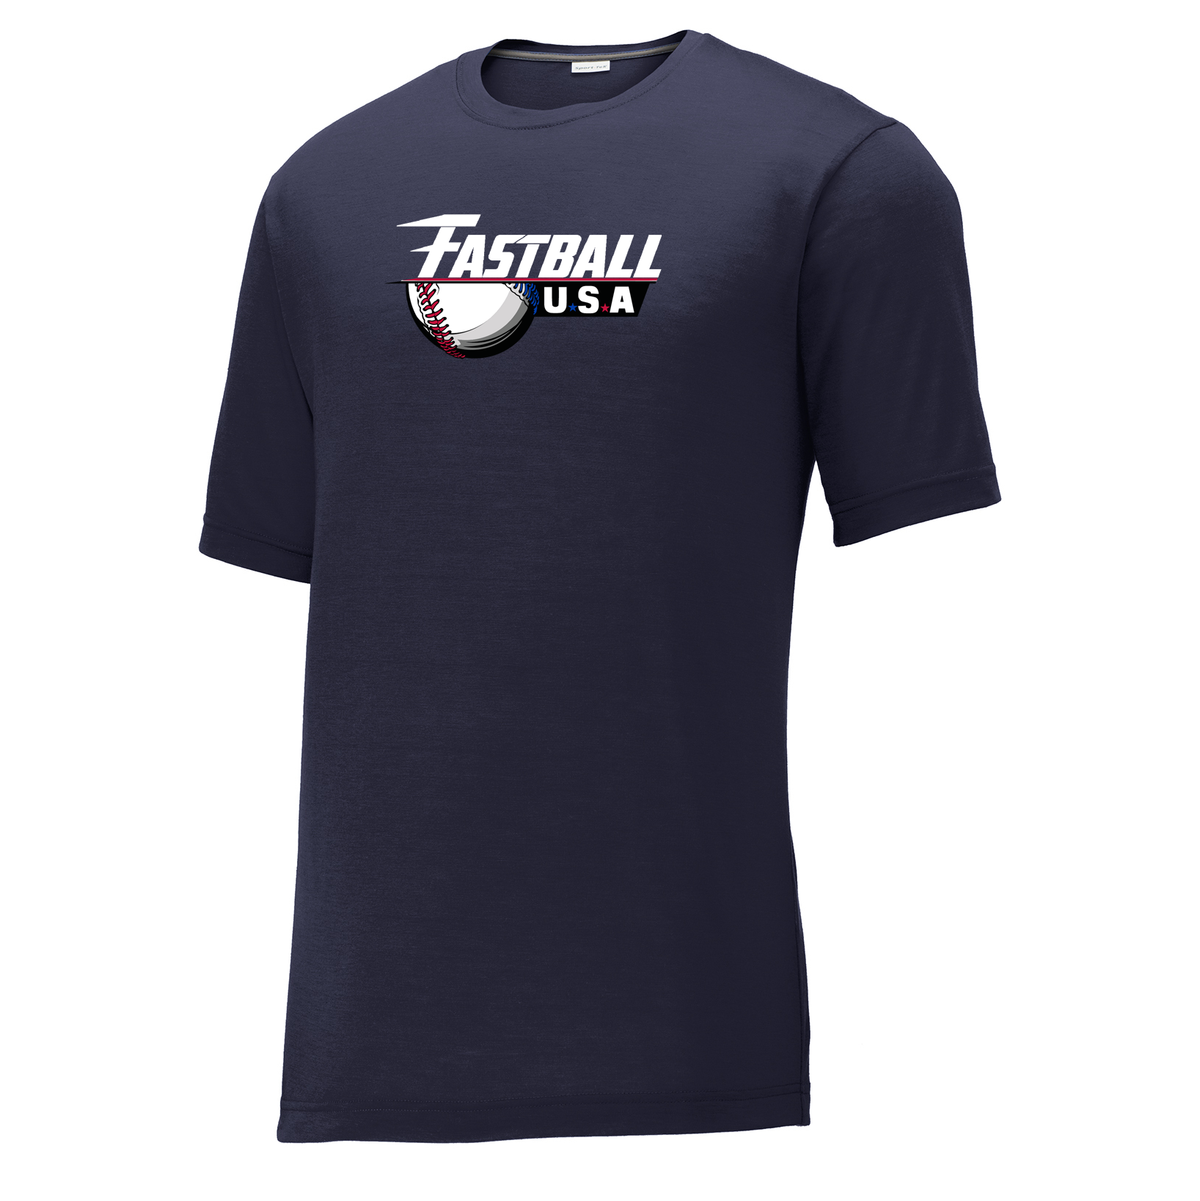 Fastball USA Academy Baseball  CottonTouch Performance T-Shirt